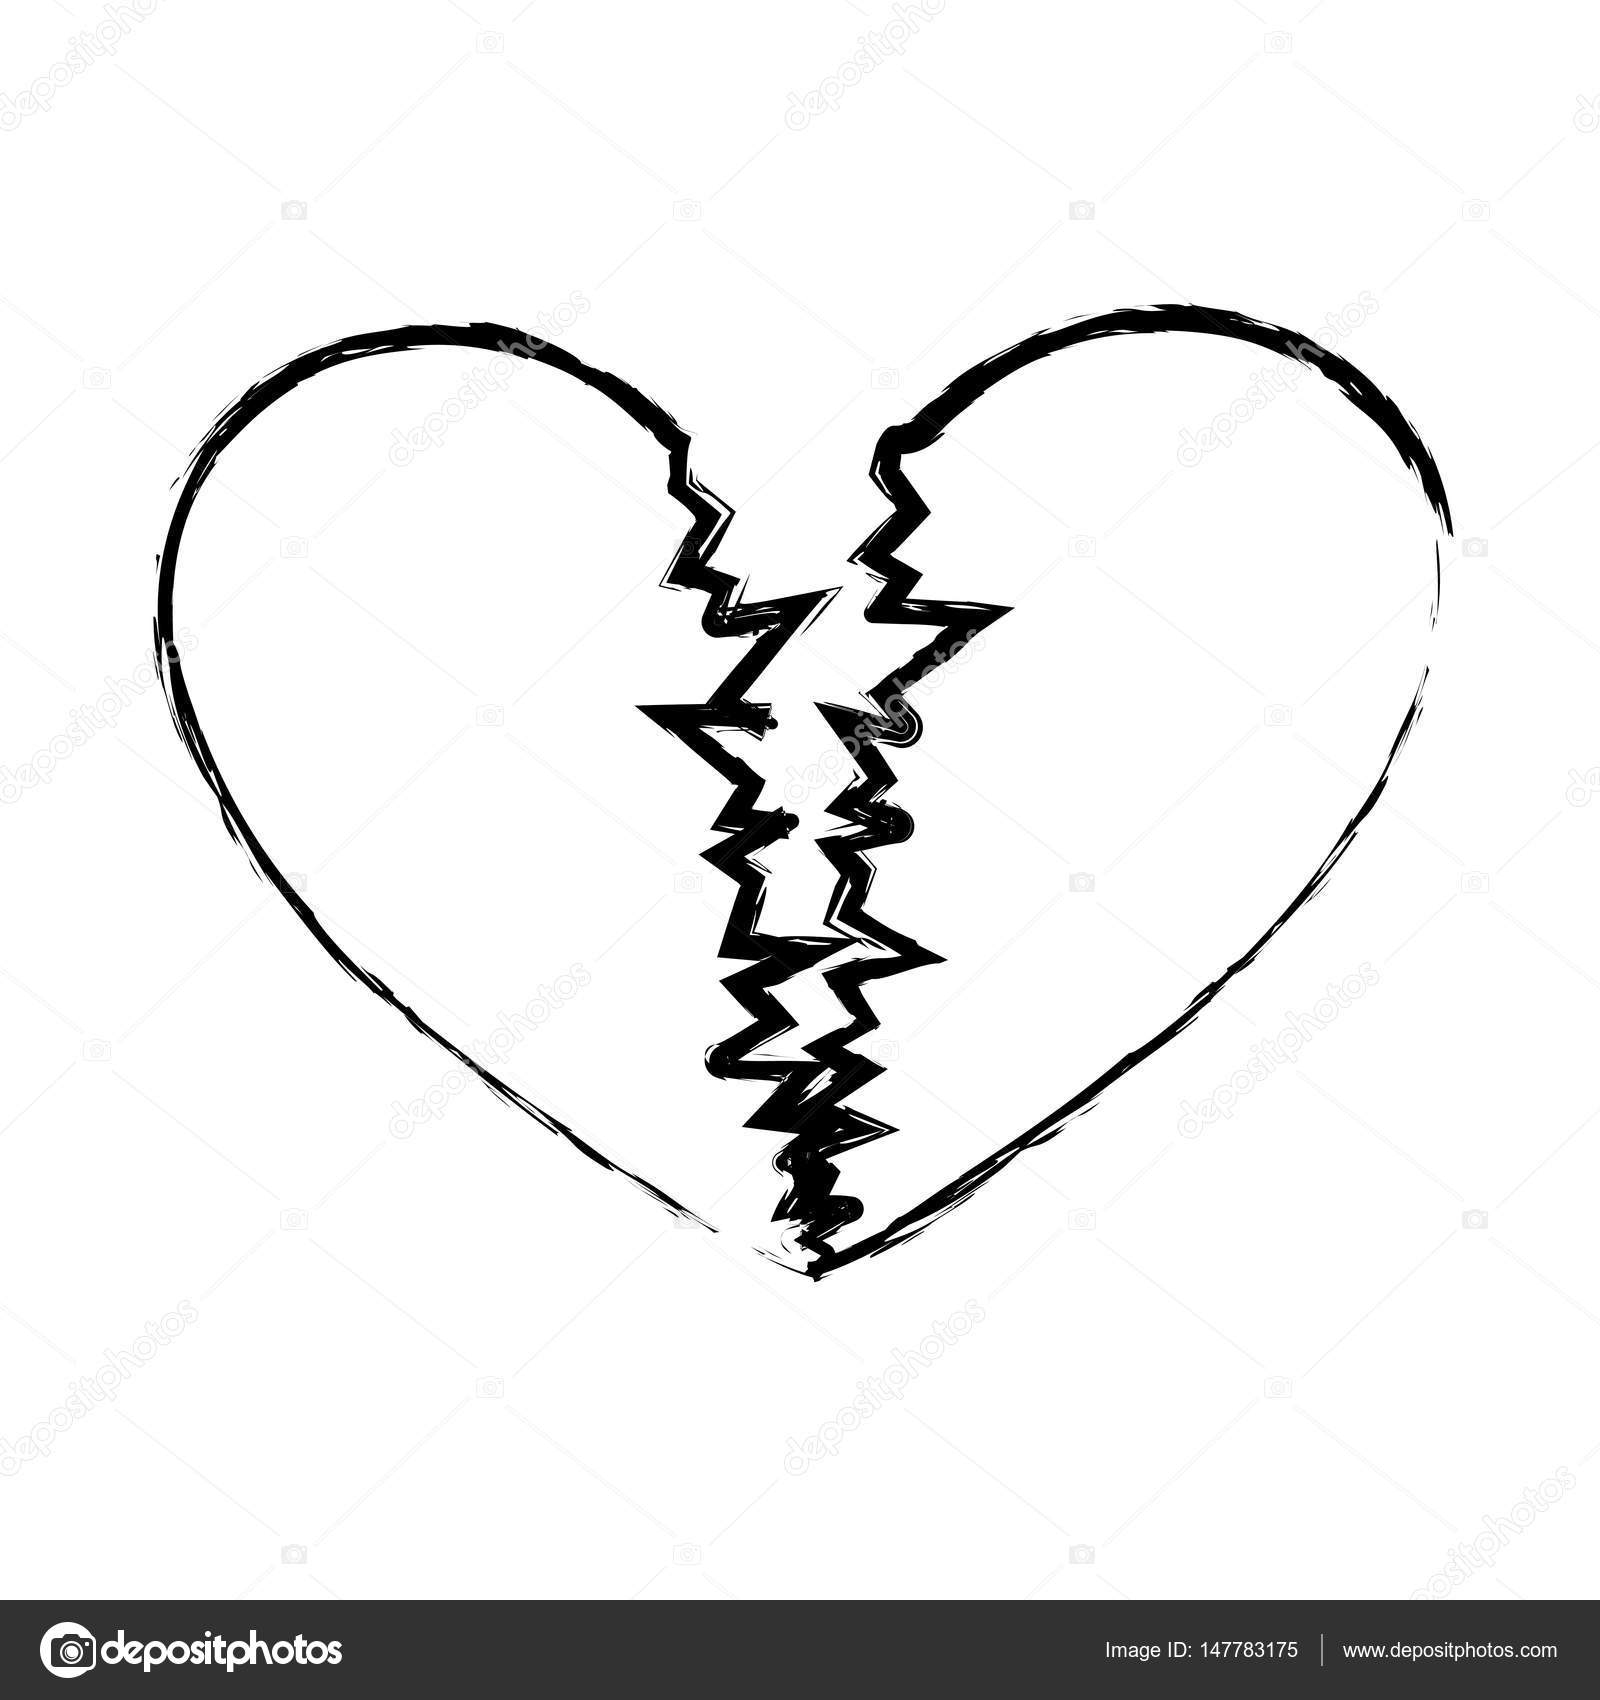 Broken Heart Drawing at GetDrawings Free download